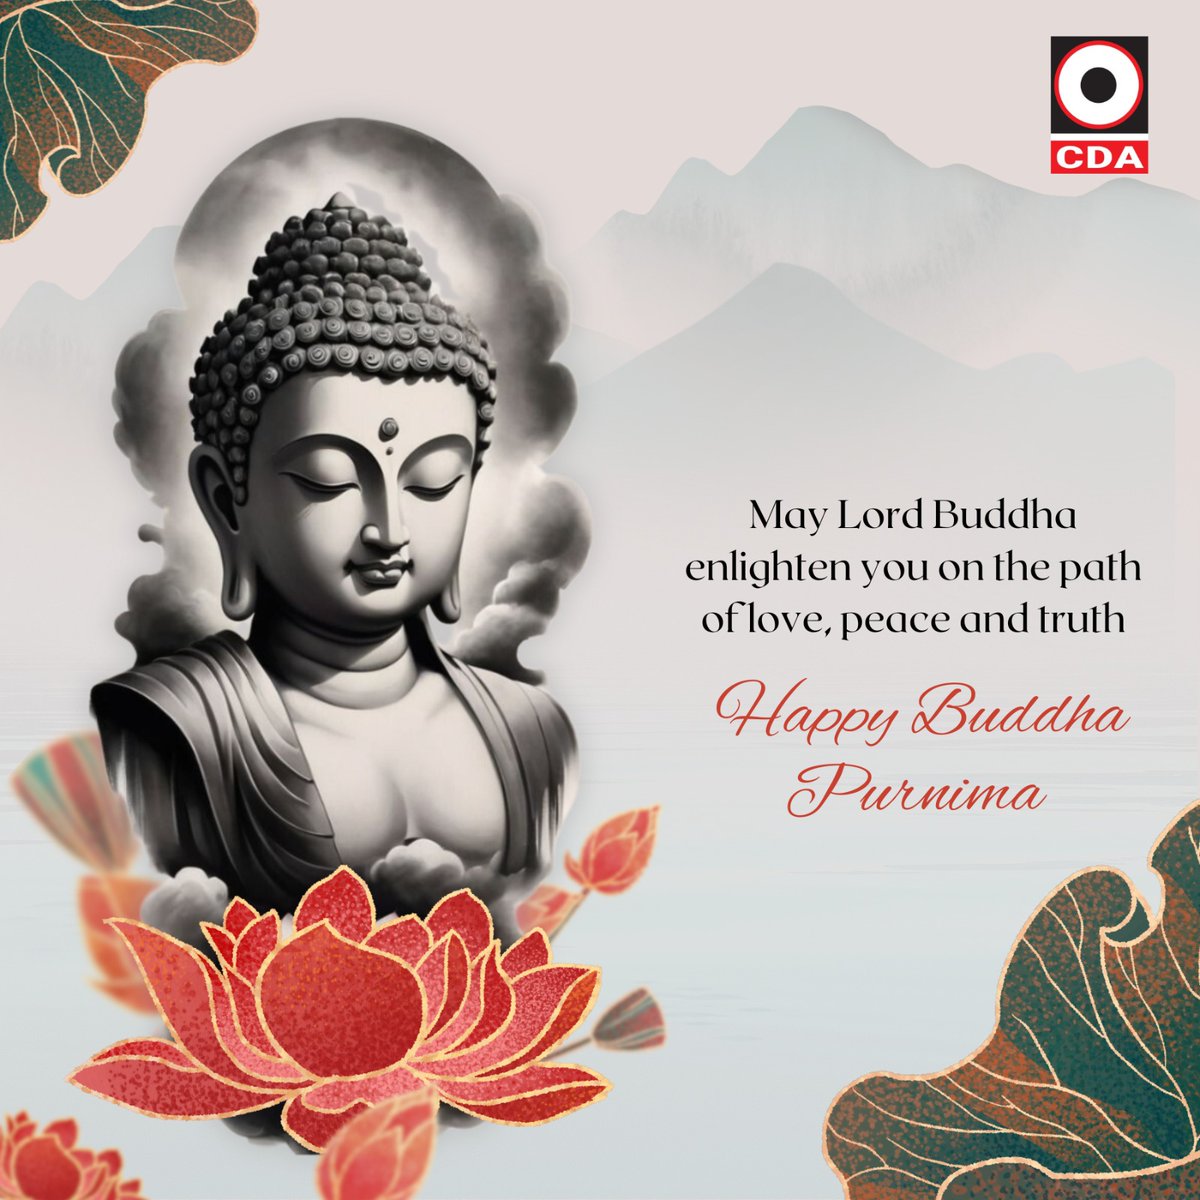 Wishing you all a day filled with serenity and joy as we celebrate the birth, enlightenment, and nirvana of Gautama Buddha.

#cuttackdevelopmentauthority #cuttackcity #CDA #BuddhaPurnima #gautambuddha